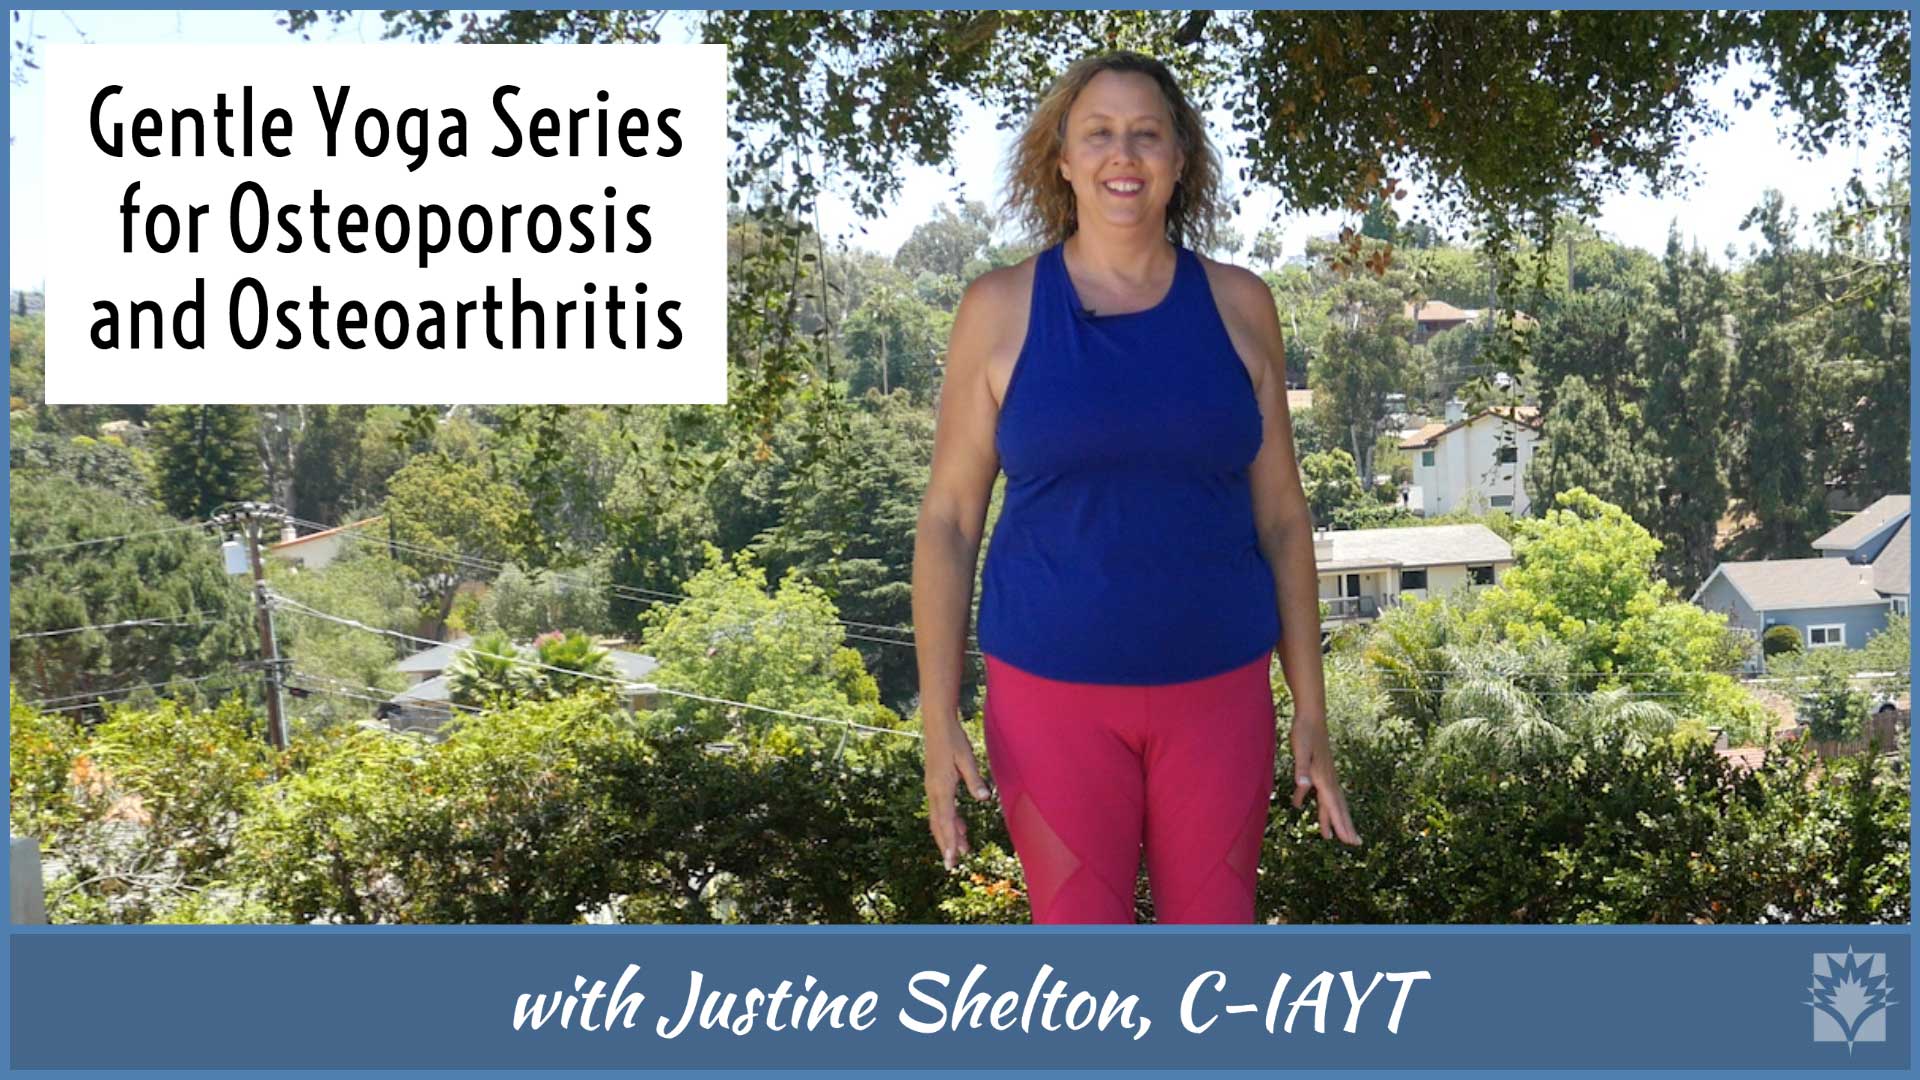 Justine Shelton Gentle Yoga for Osteoporosis and Osteoarthritis